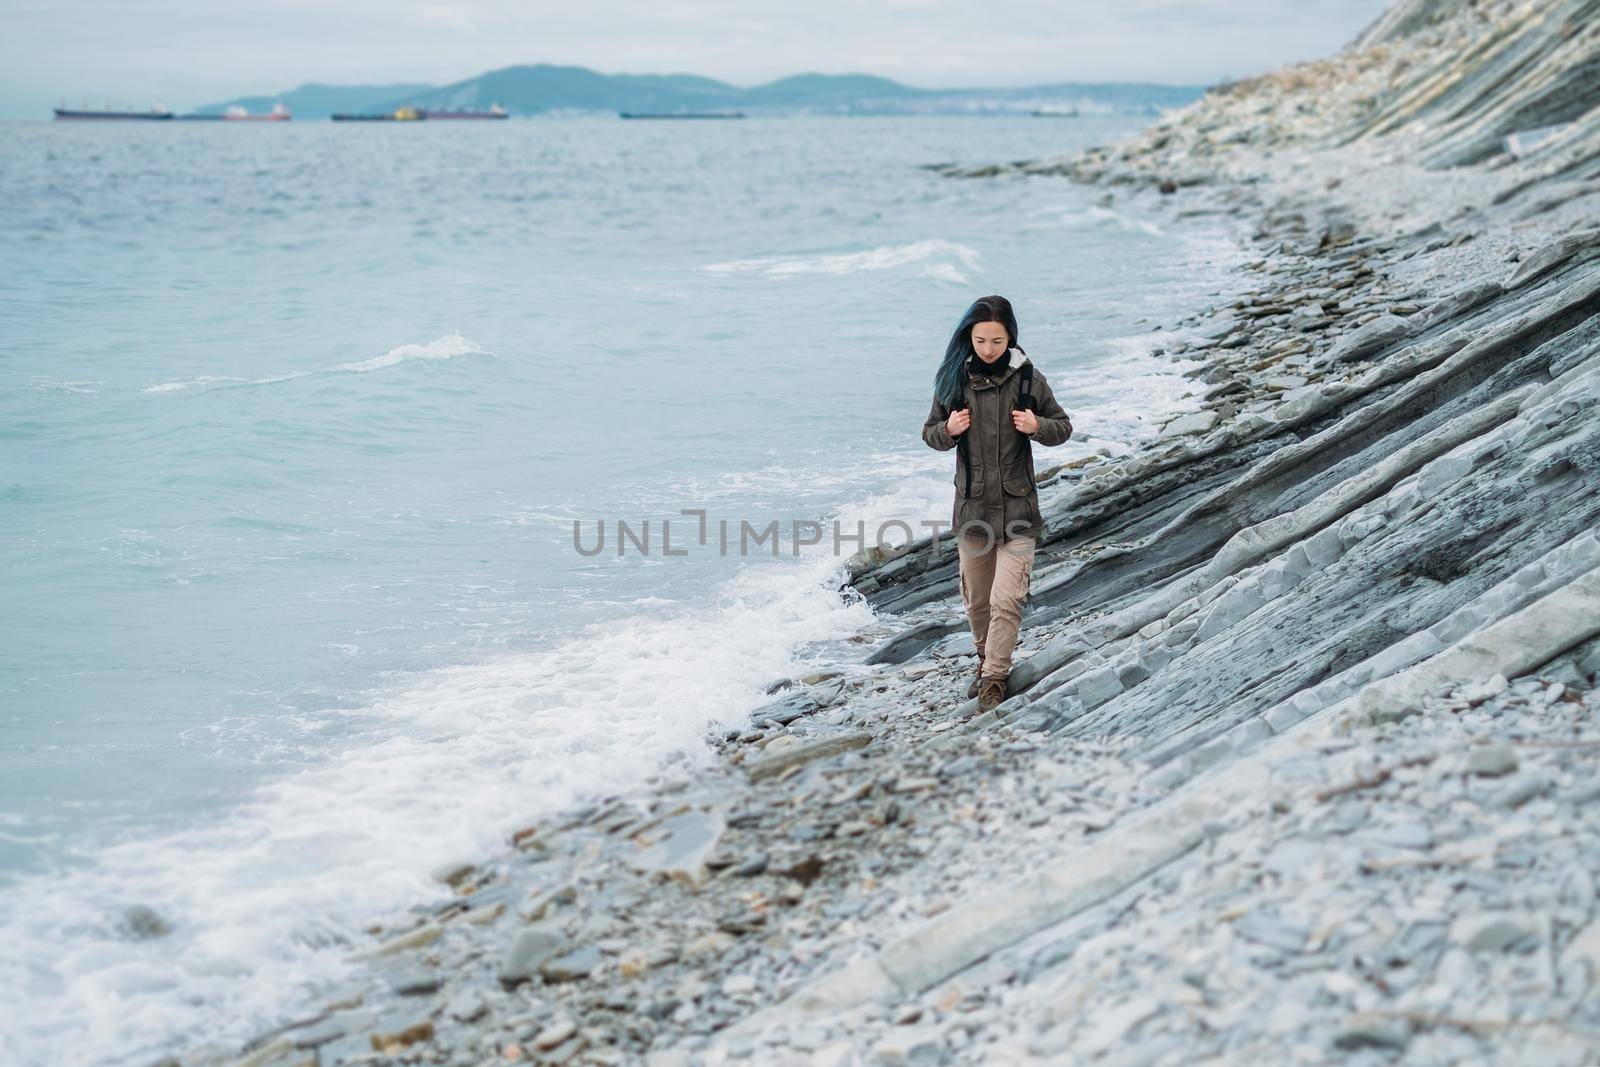 Girl wearing in warm clothing walking on coast near the sea in winter or autumn season